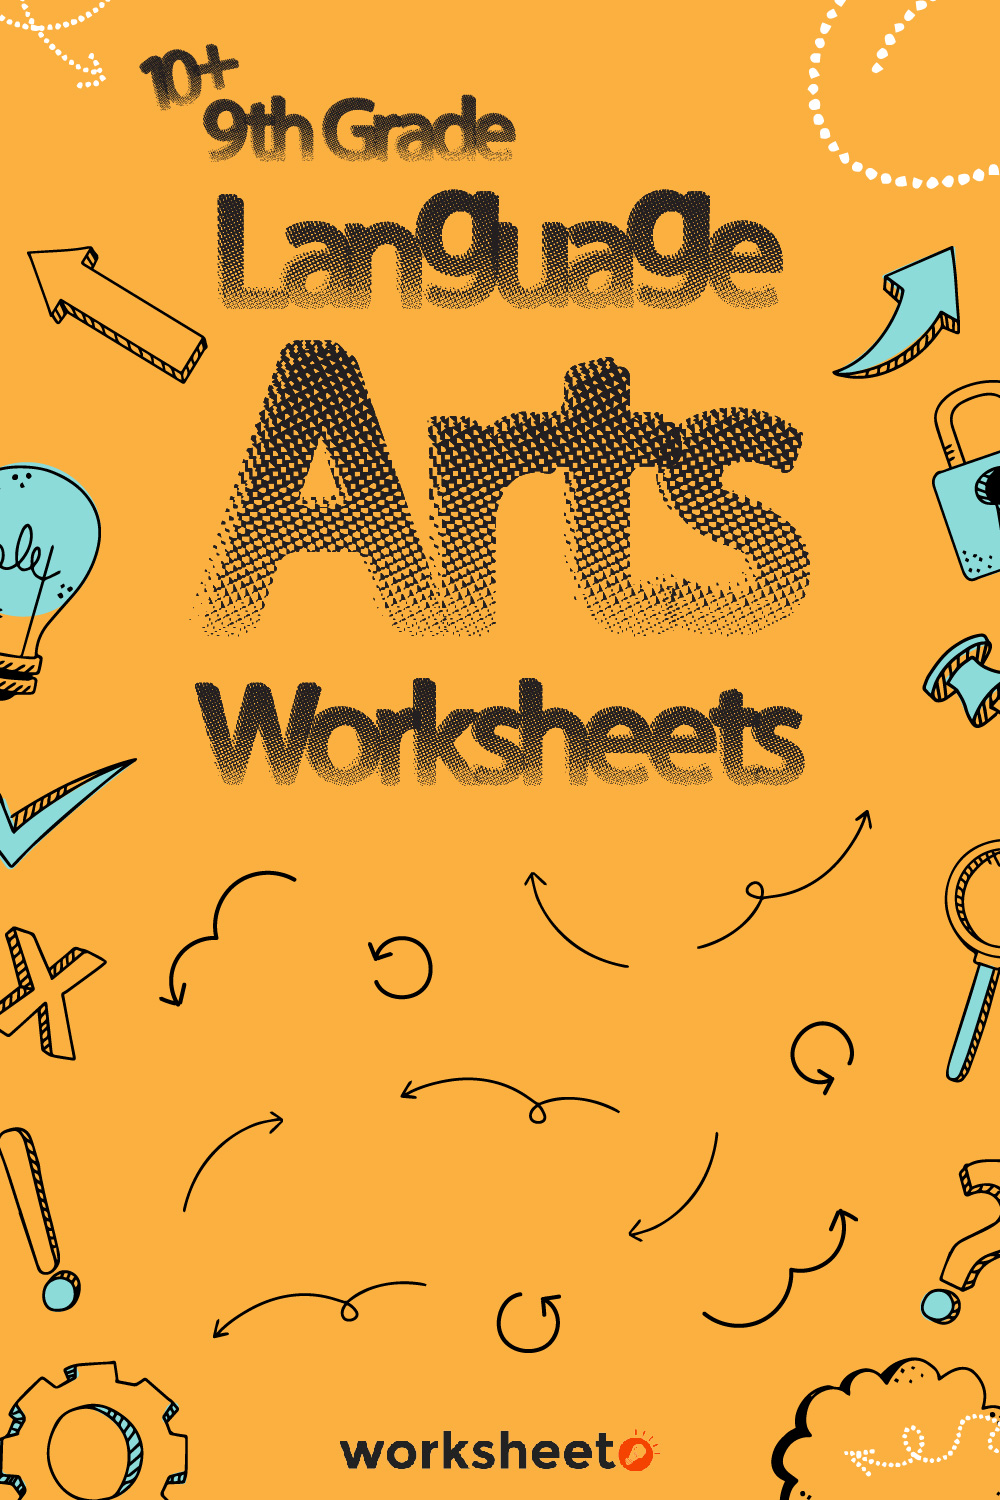 15 Images of 9th Grade Language Arts Worksheets